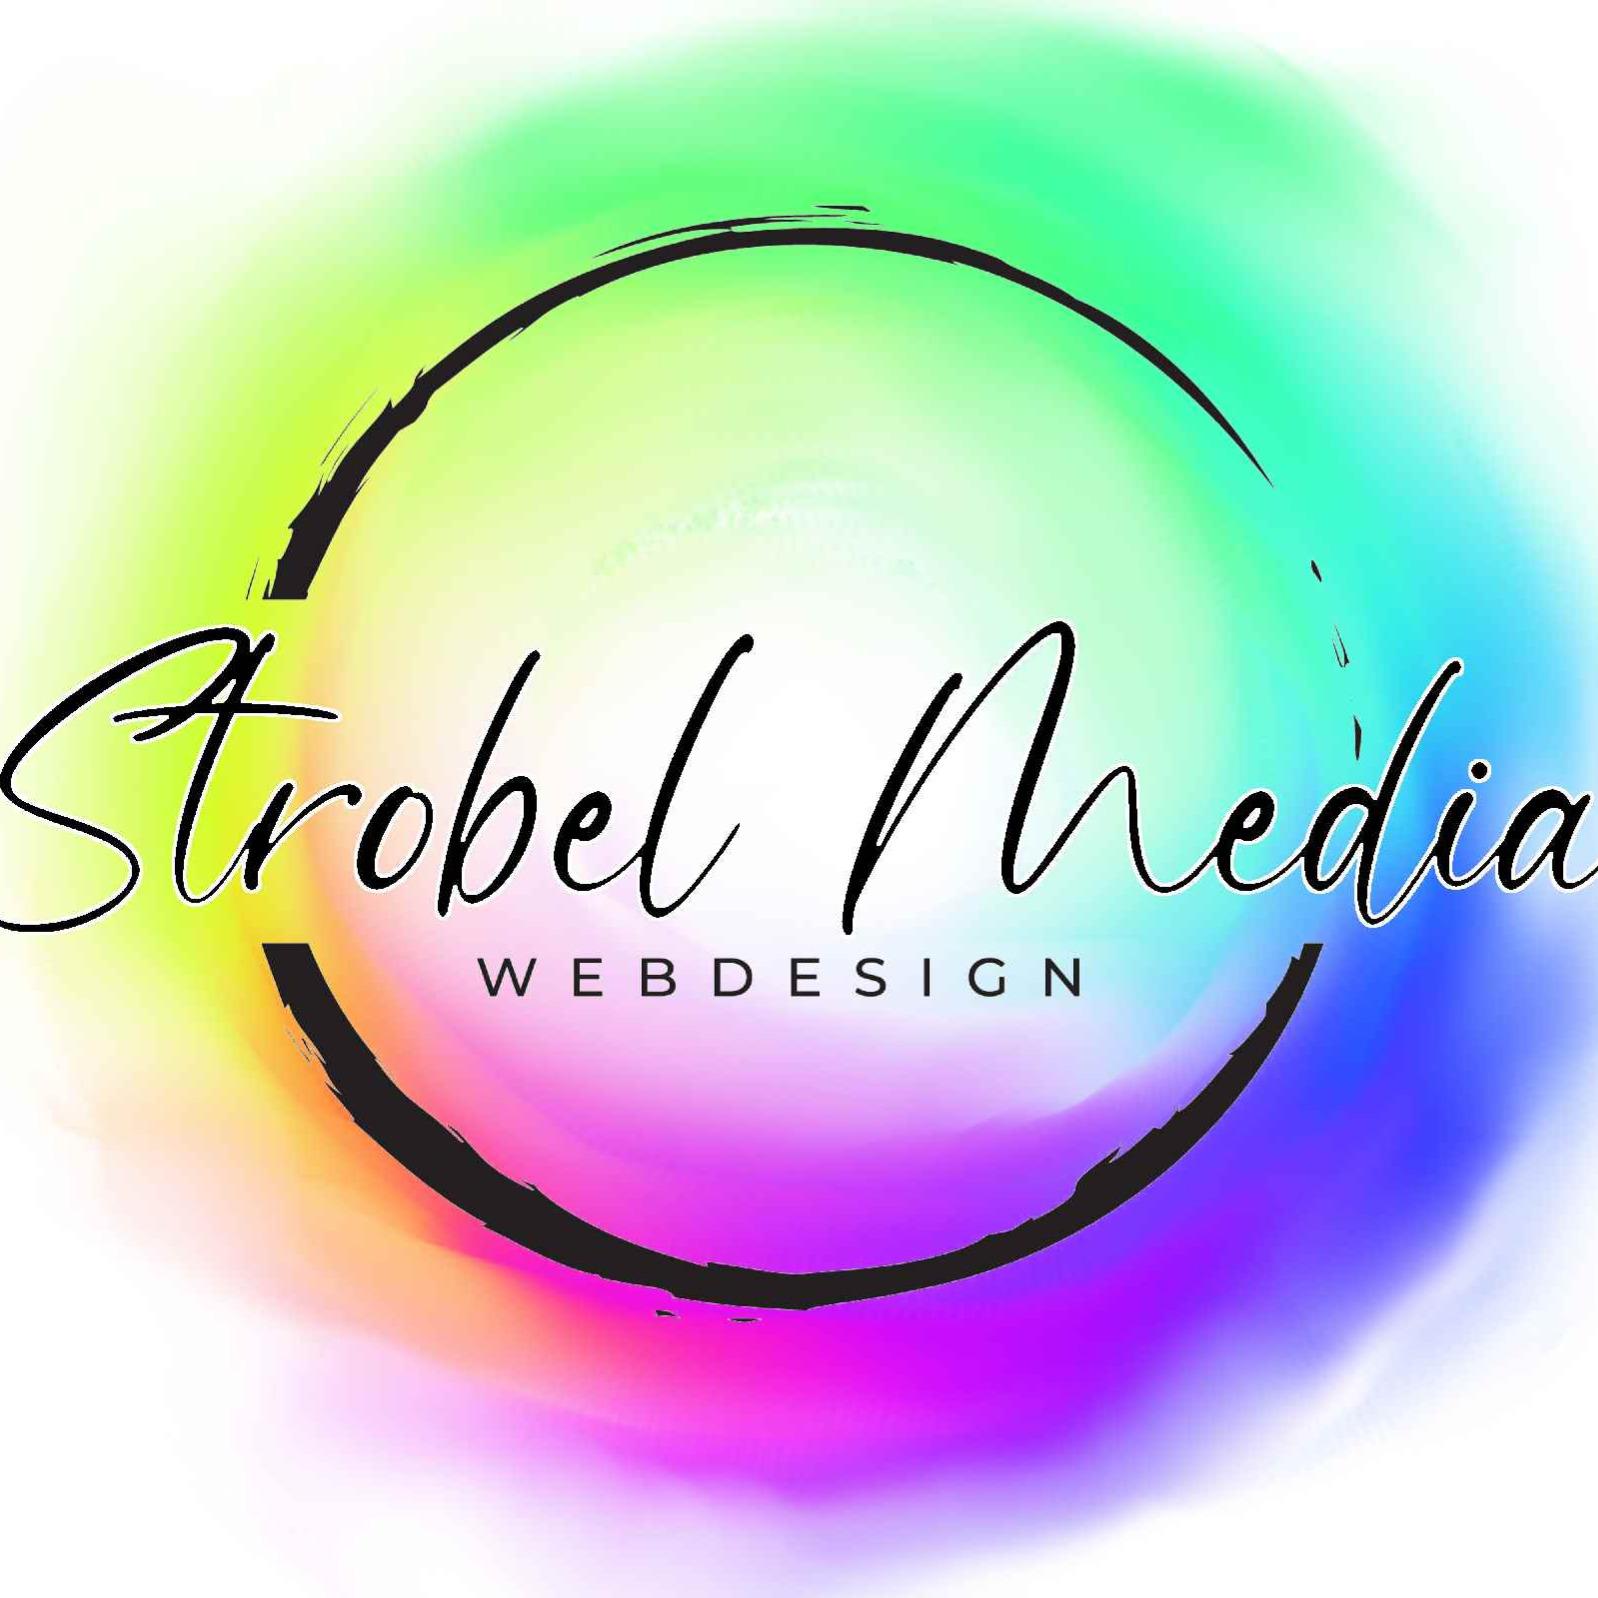 Logo Webdesign Strobel Media